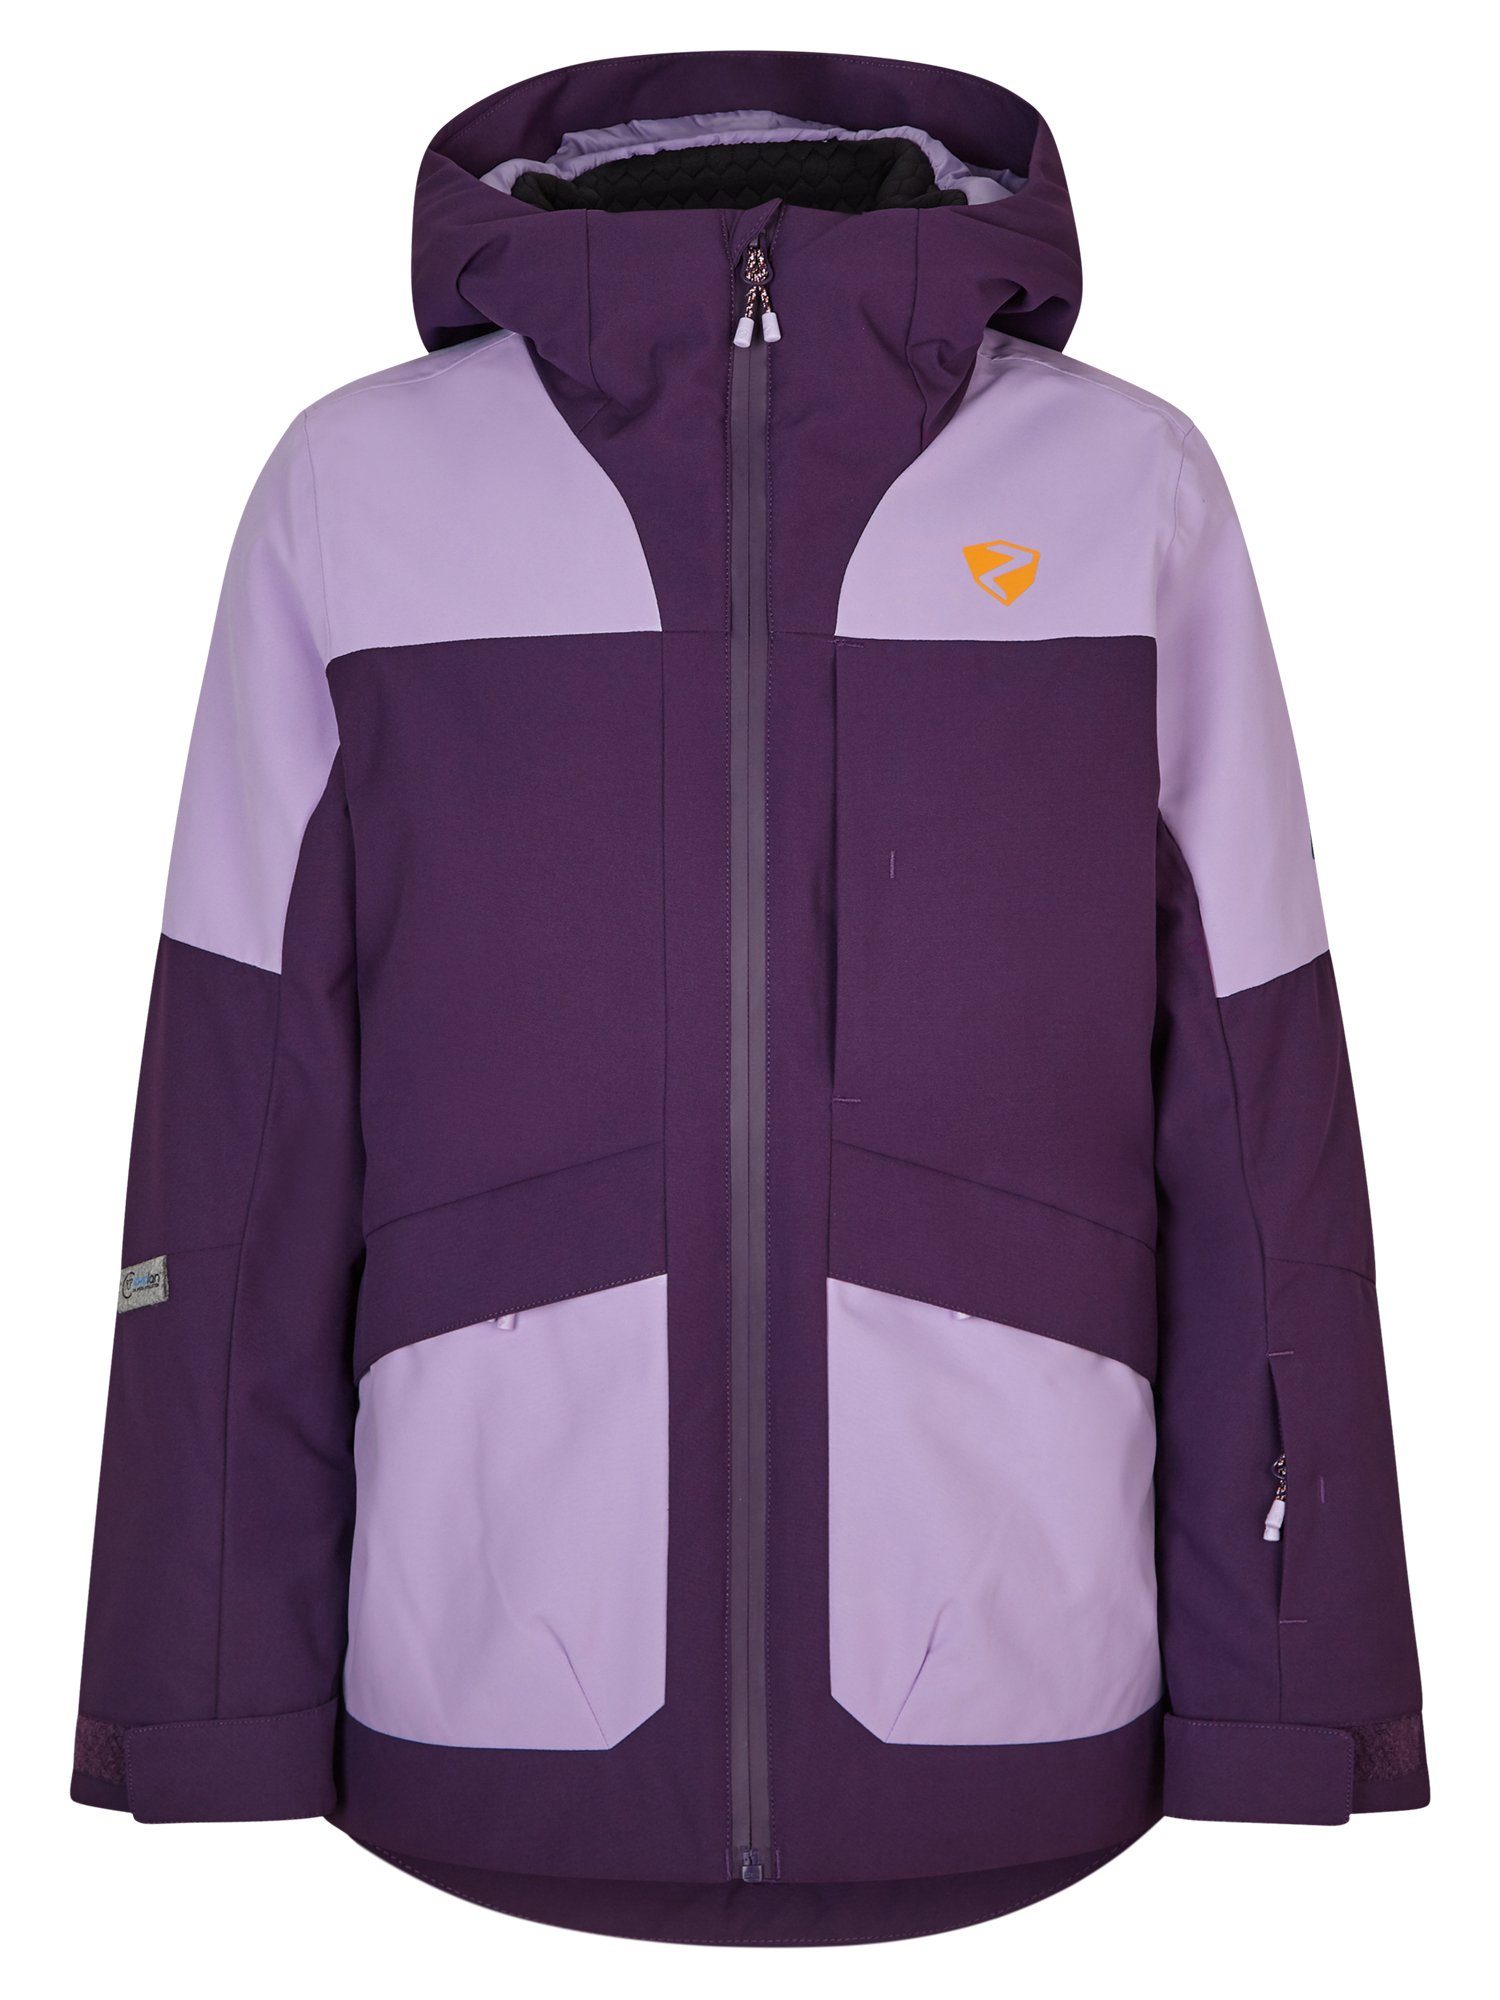 Ziener Skijacke AYUS jun (jacket ski) dark violet